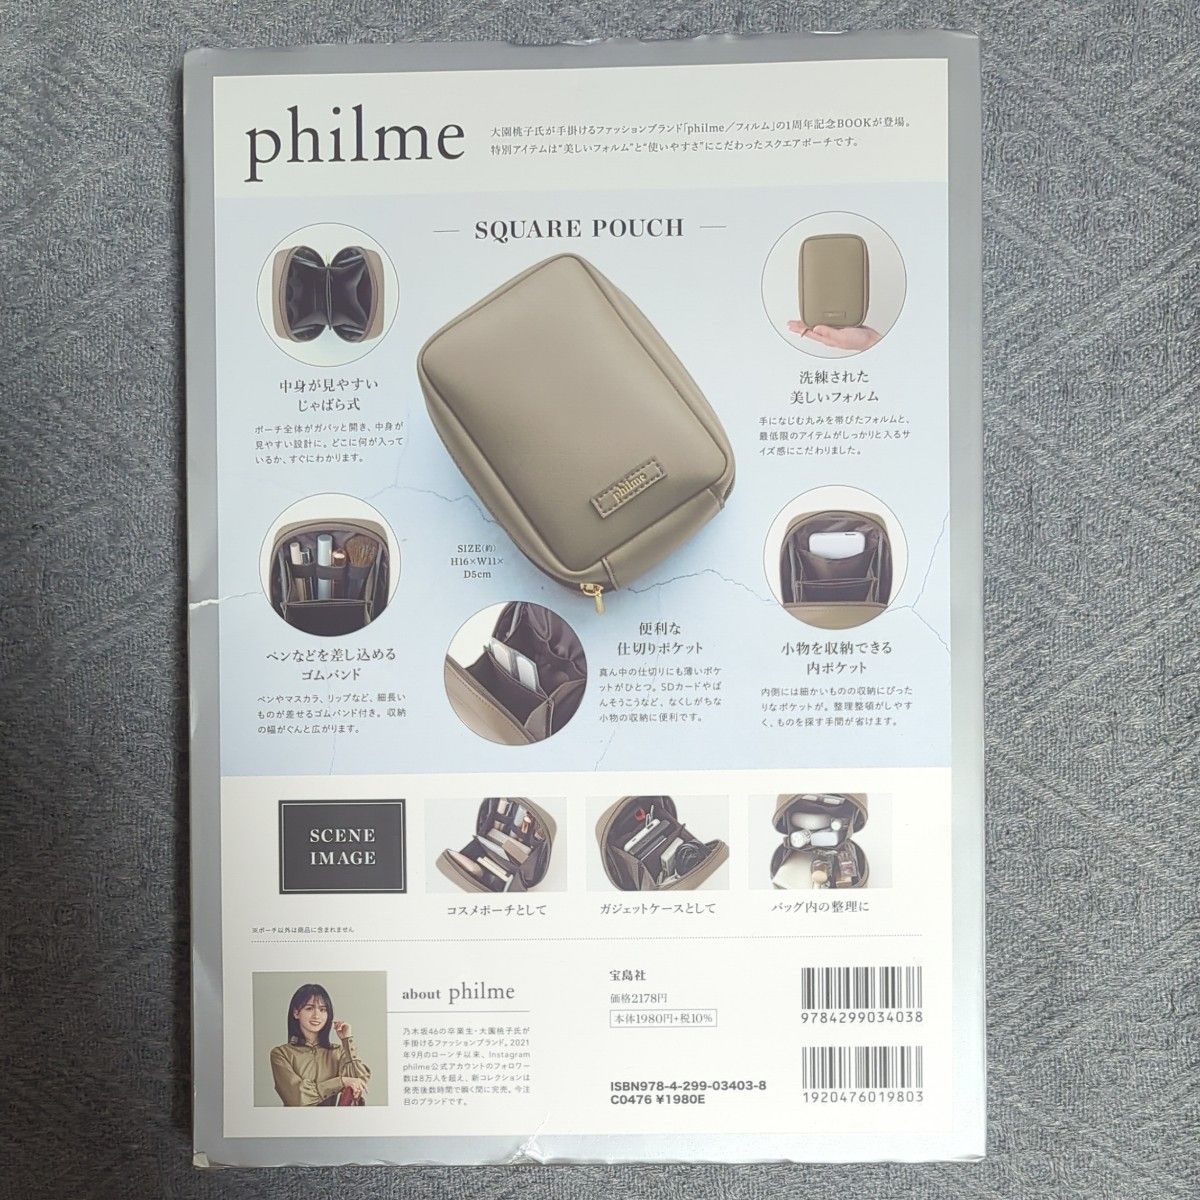 philme 1st anniversary book 大園桃子 フィルム スクエアポーチ  宝島社 付録